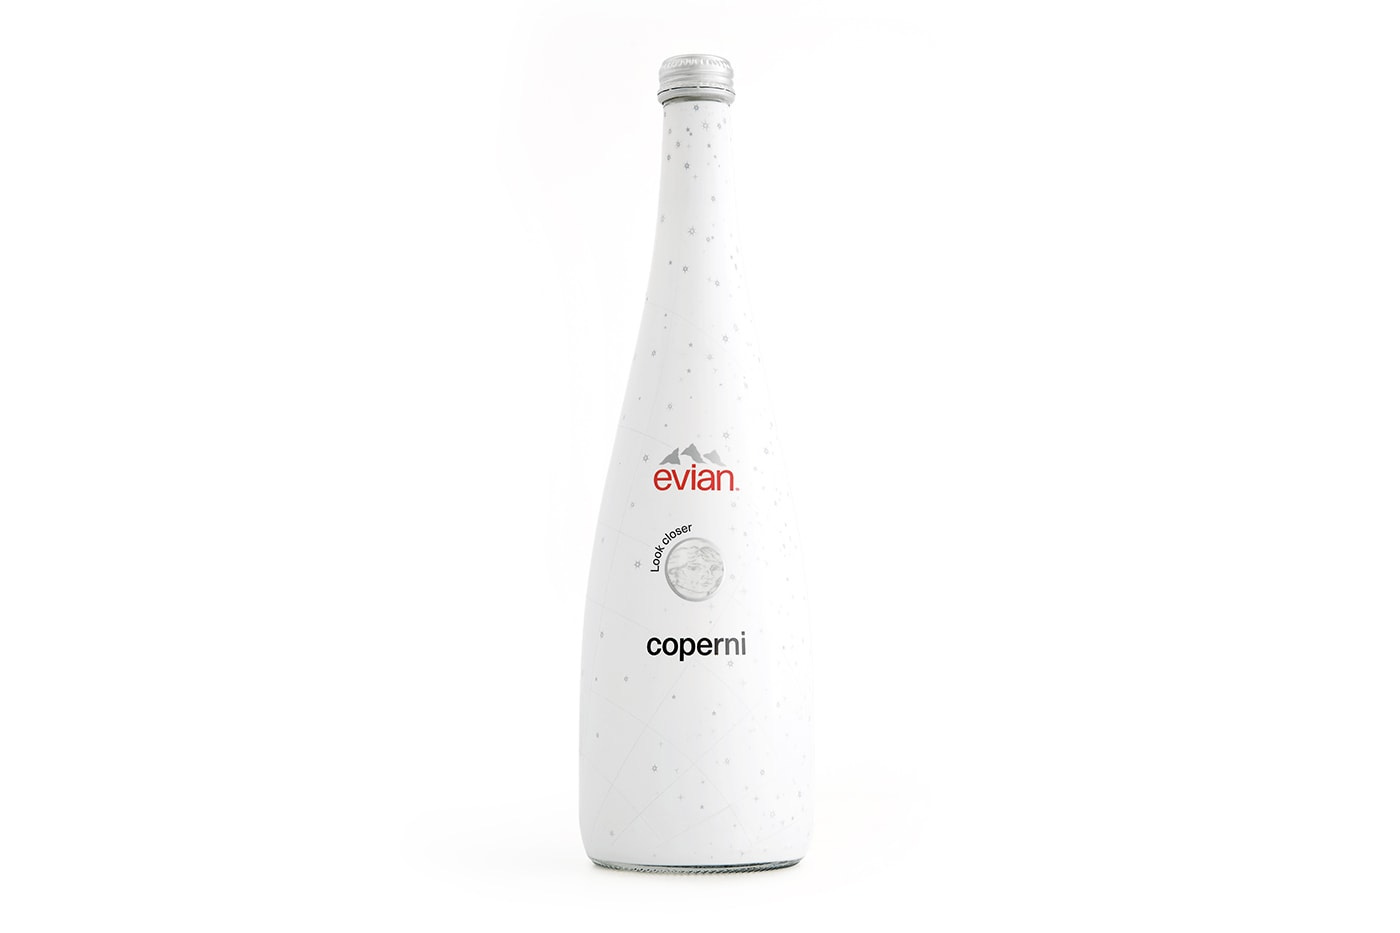 Coperni x evian Bottle Collaboration | Hypebeast